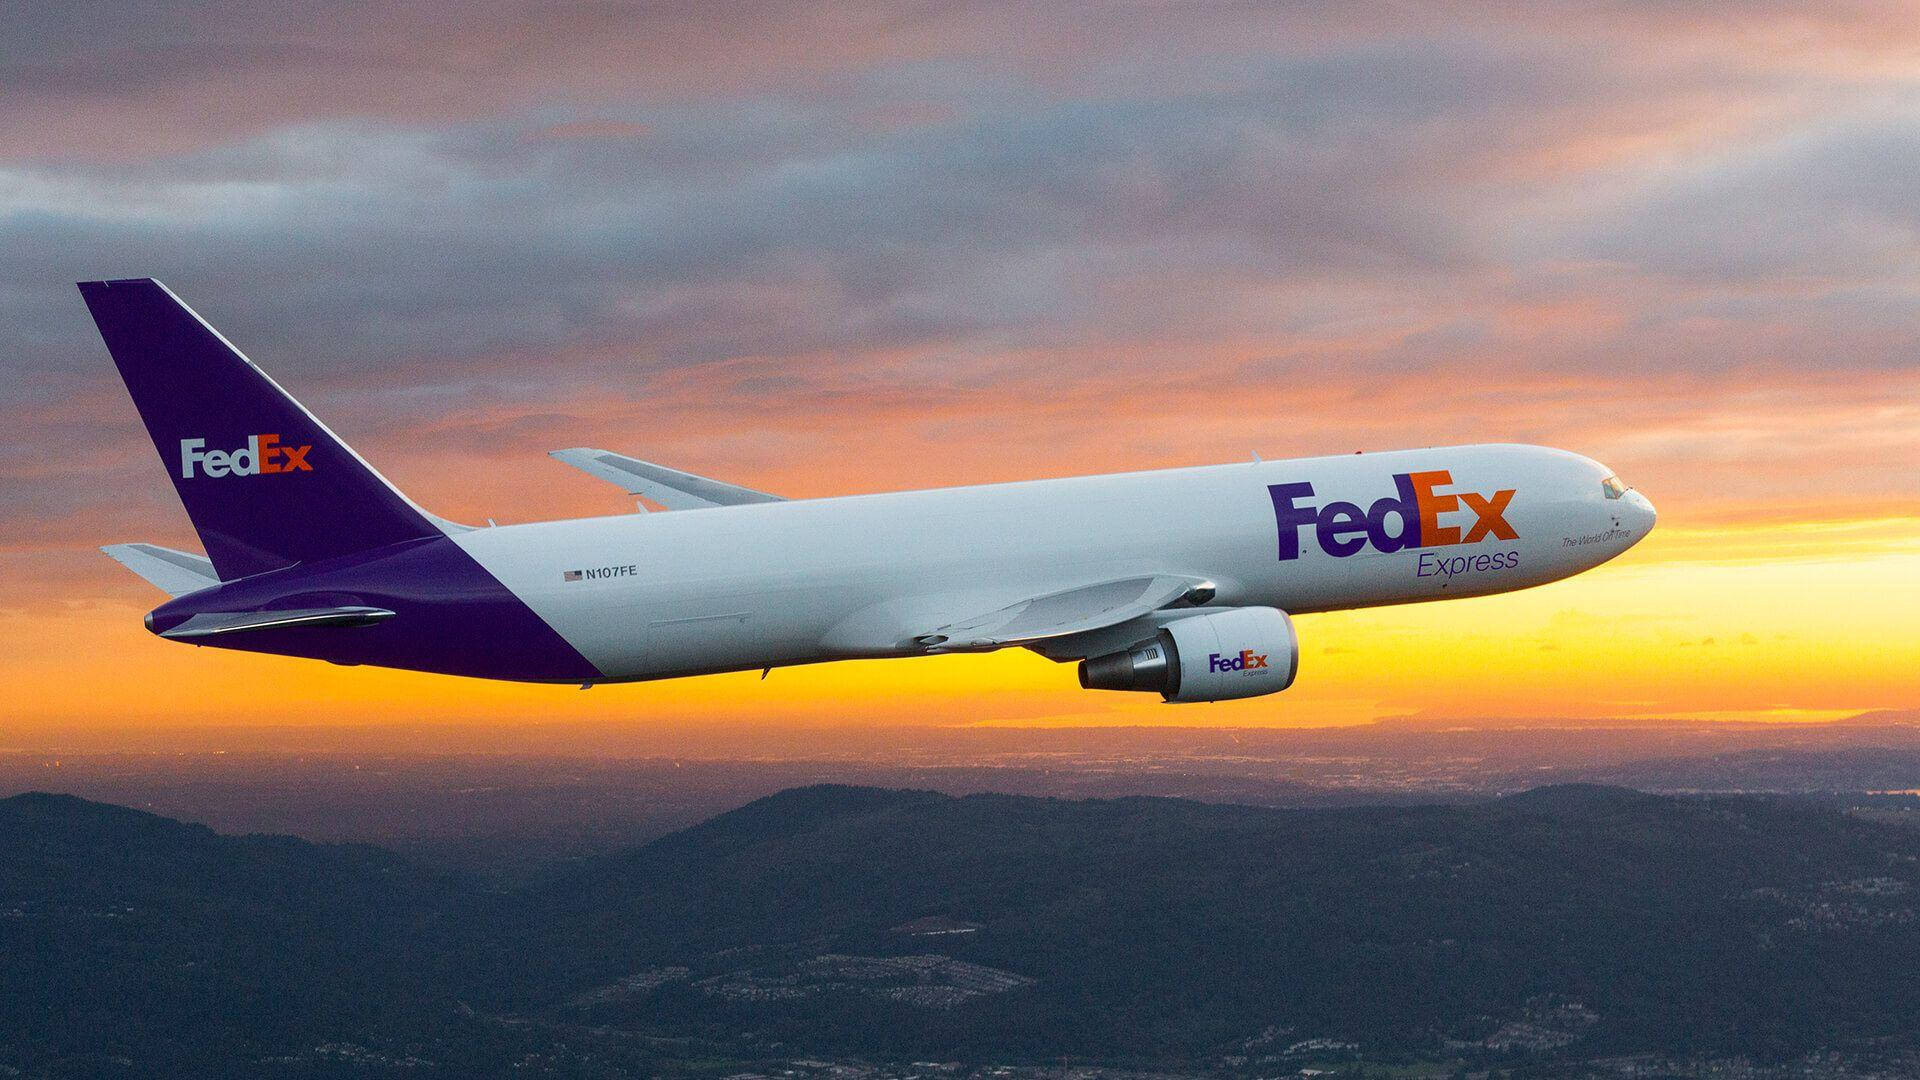 Fedex Express Sunrise